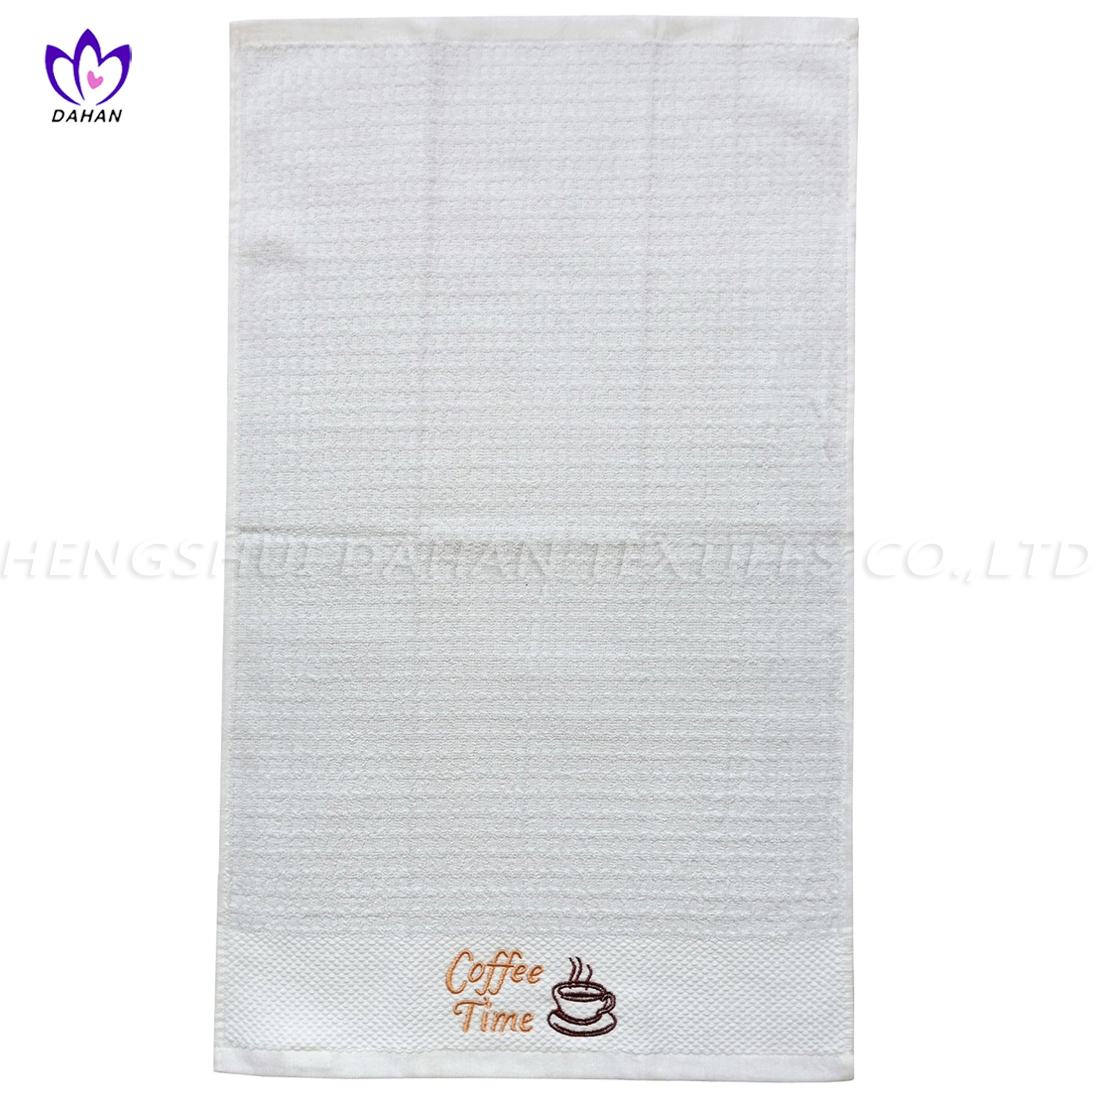 421VW 100%cotton walf checks embroidery towel.